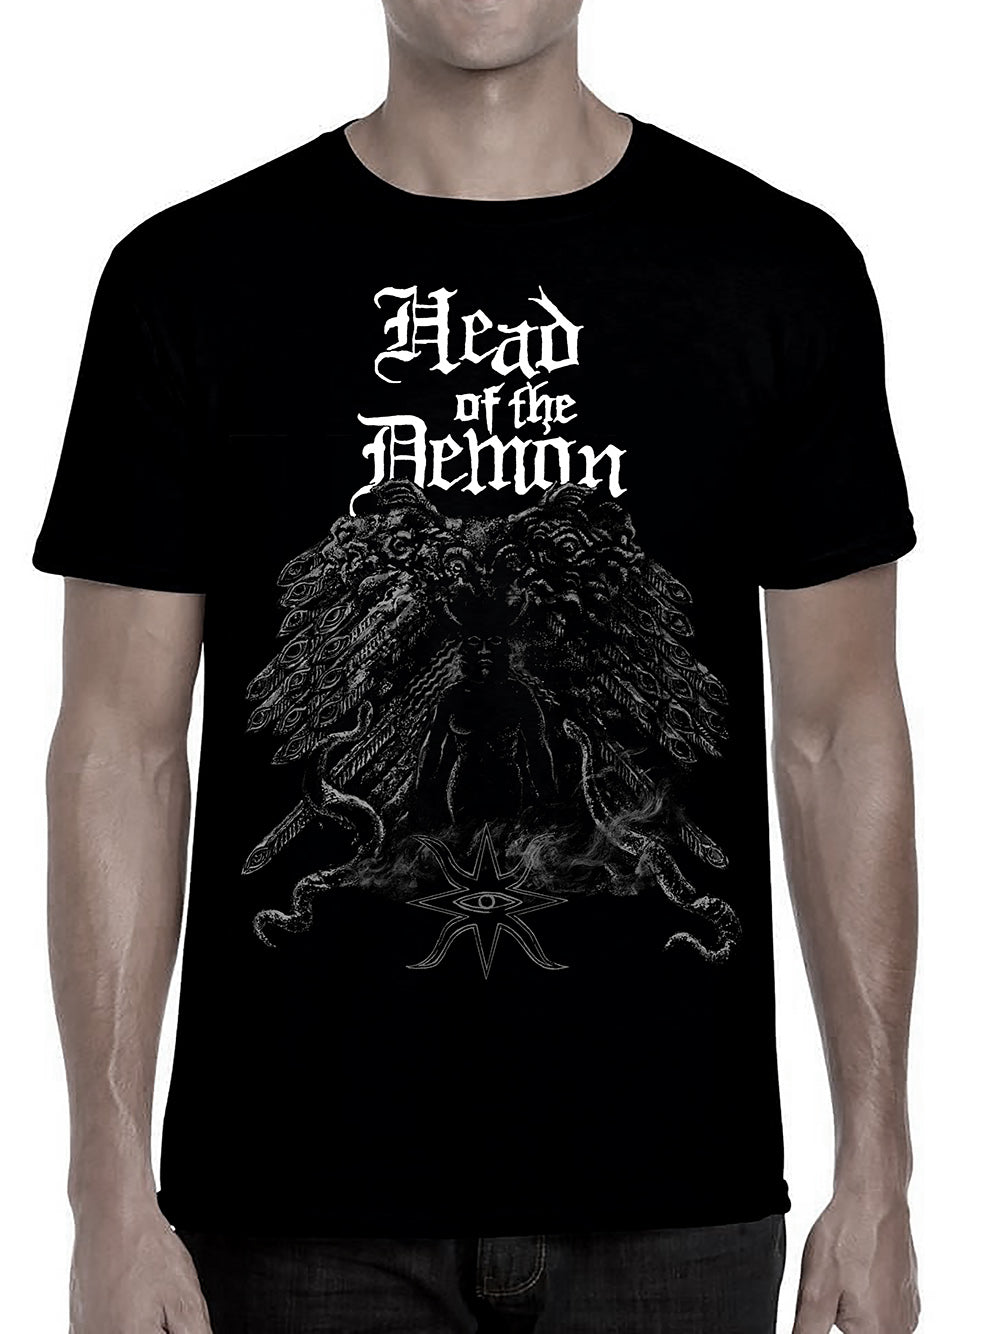 Head of the Demon - Deadly Black Doom T Shirt